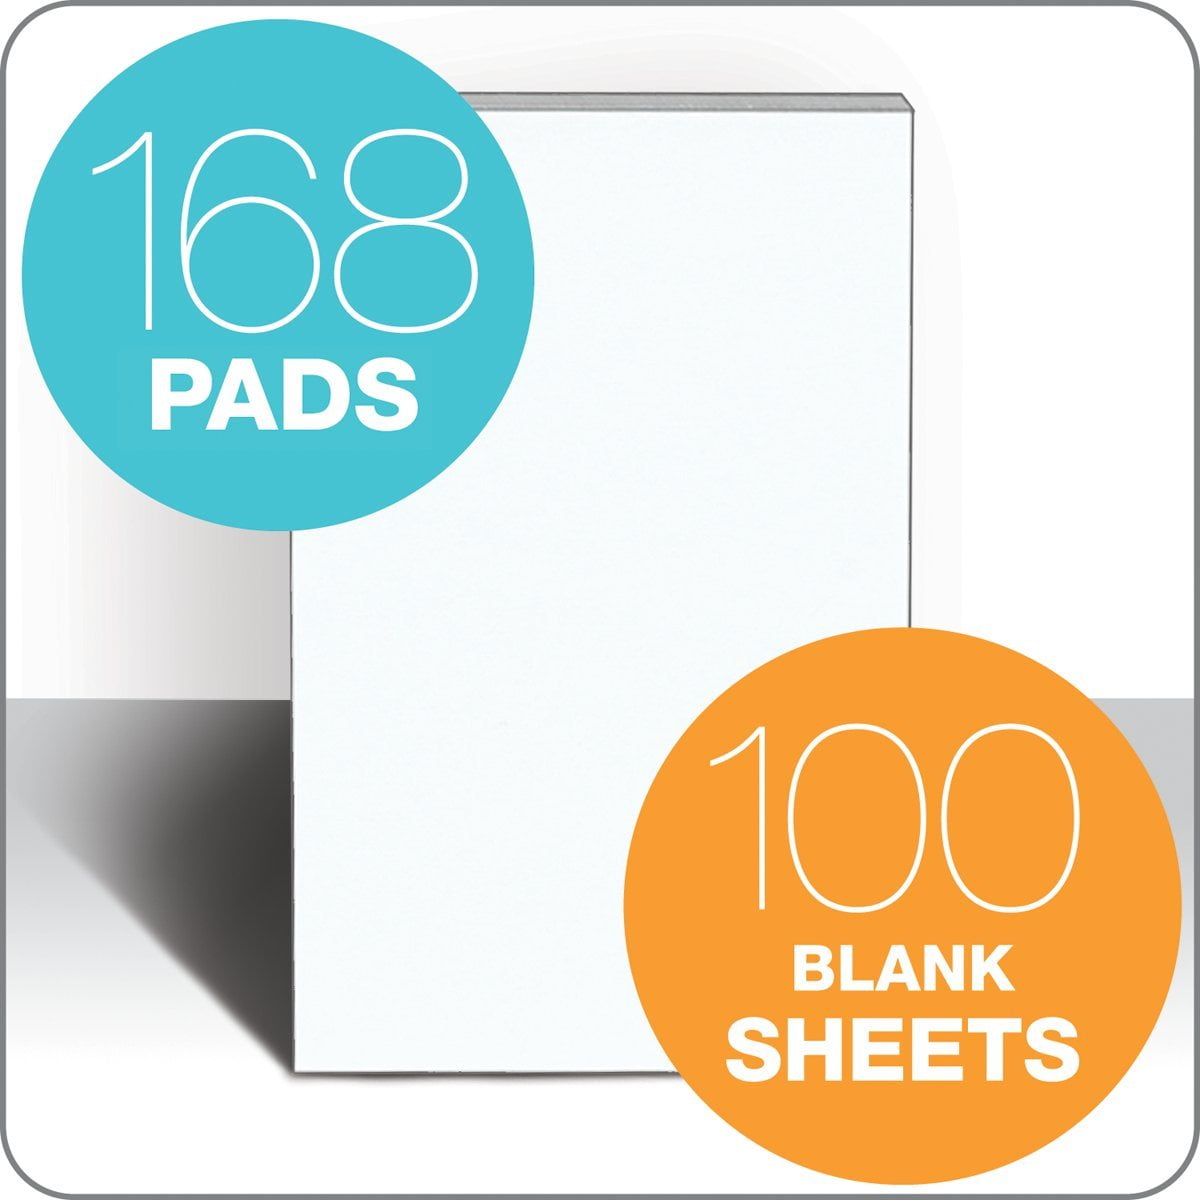 TOPS™ Glue Top Bulk Scratch Pads, 3 x 5, Unruled, 100 Sheets, Case Of 168